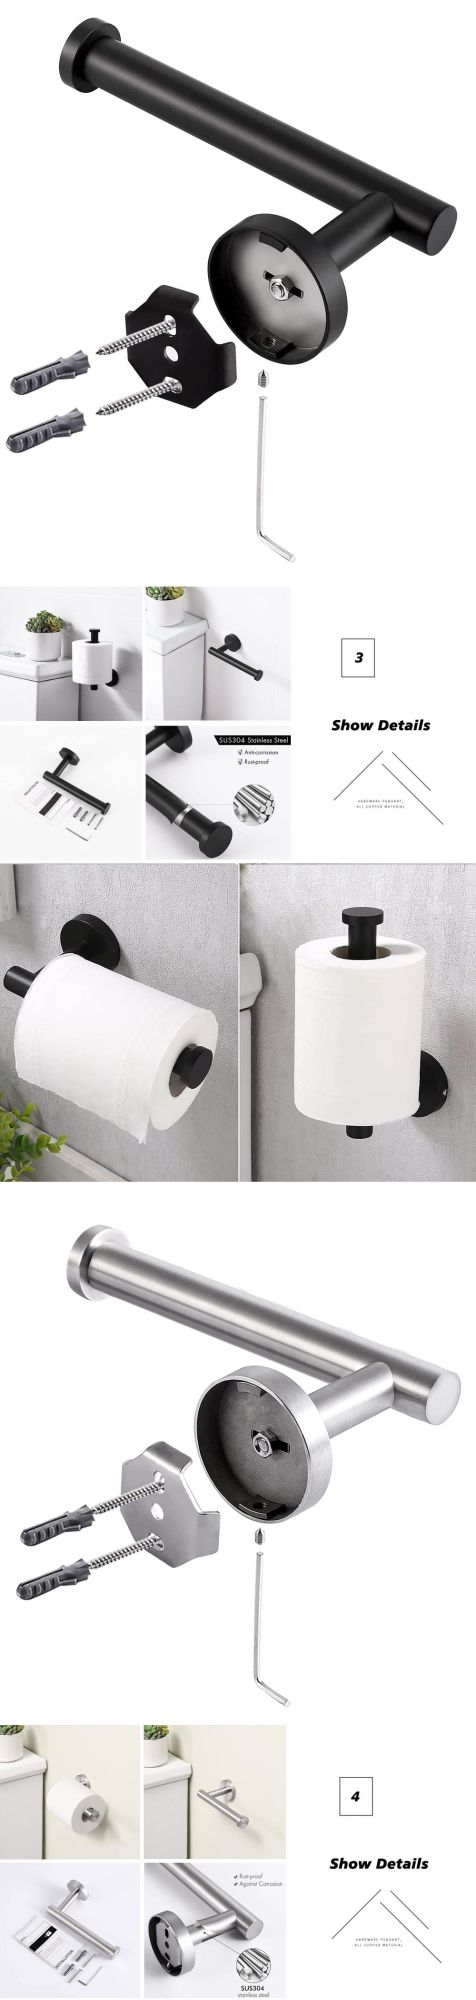 Bathroom Toilet Paper Holder Brushed Glod Wall Mount Toilet Roll Holder SUS304 Stainless Steel